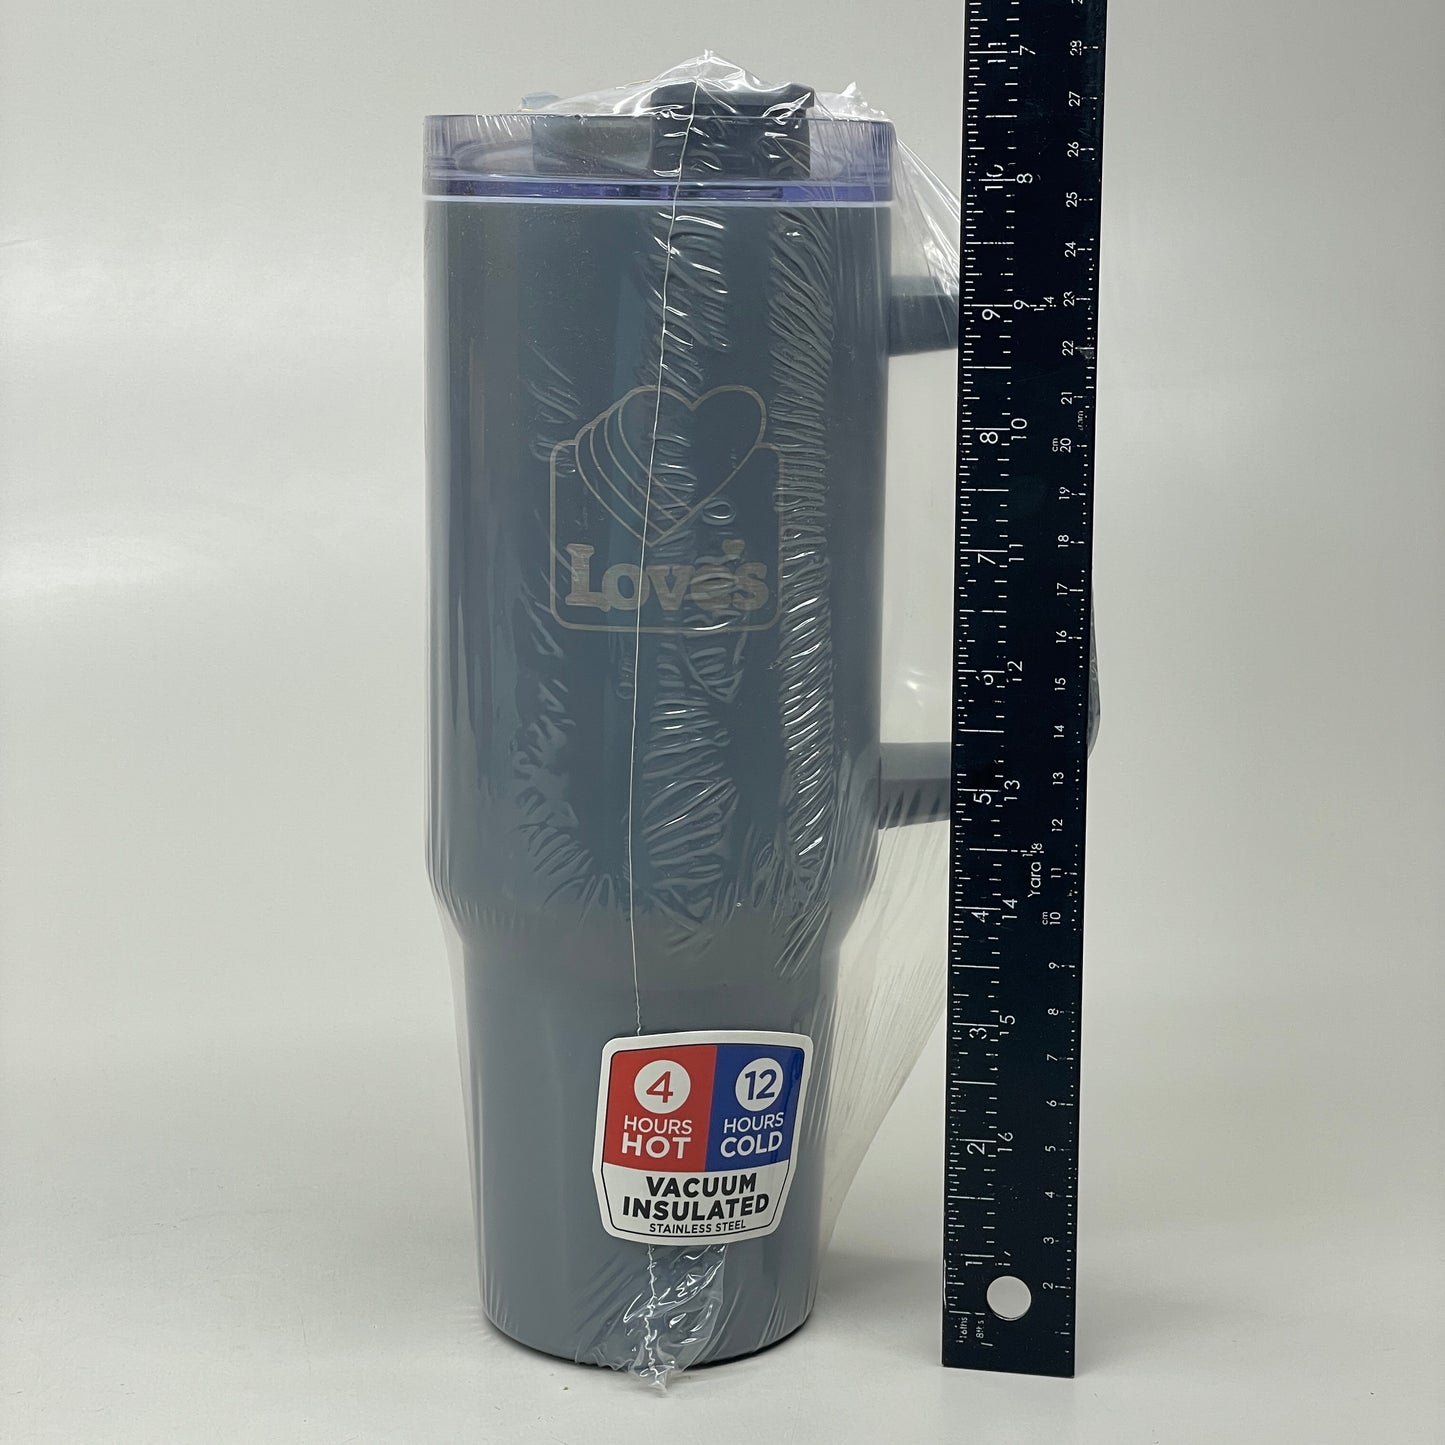 EASYGO DRINKWARE Love's Lake Vacuum Insulated Stainless Steel Mug 40oz Gray LKM-40